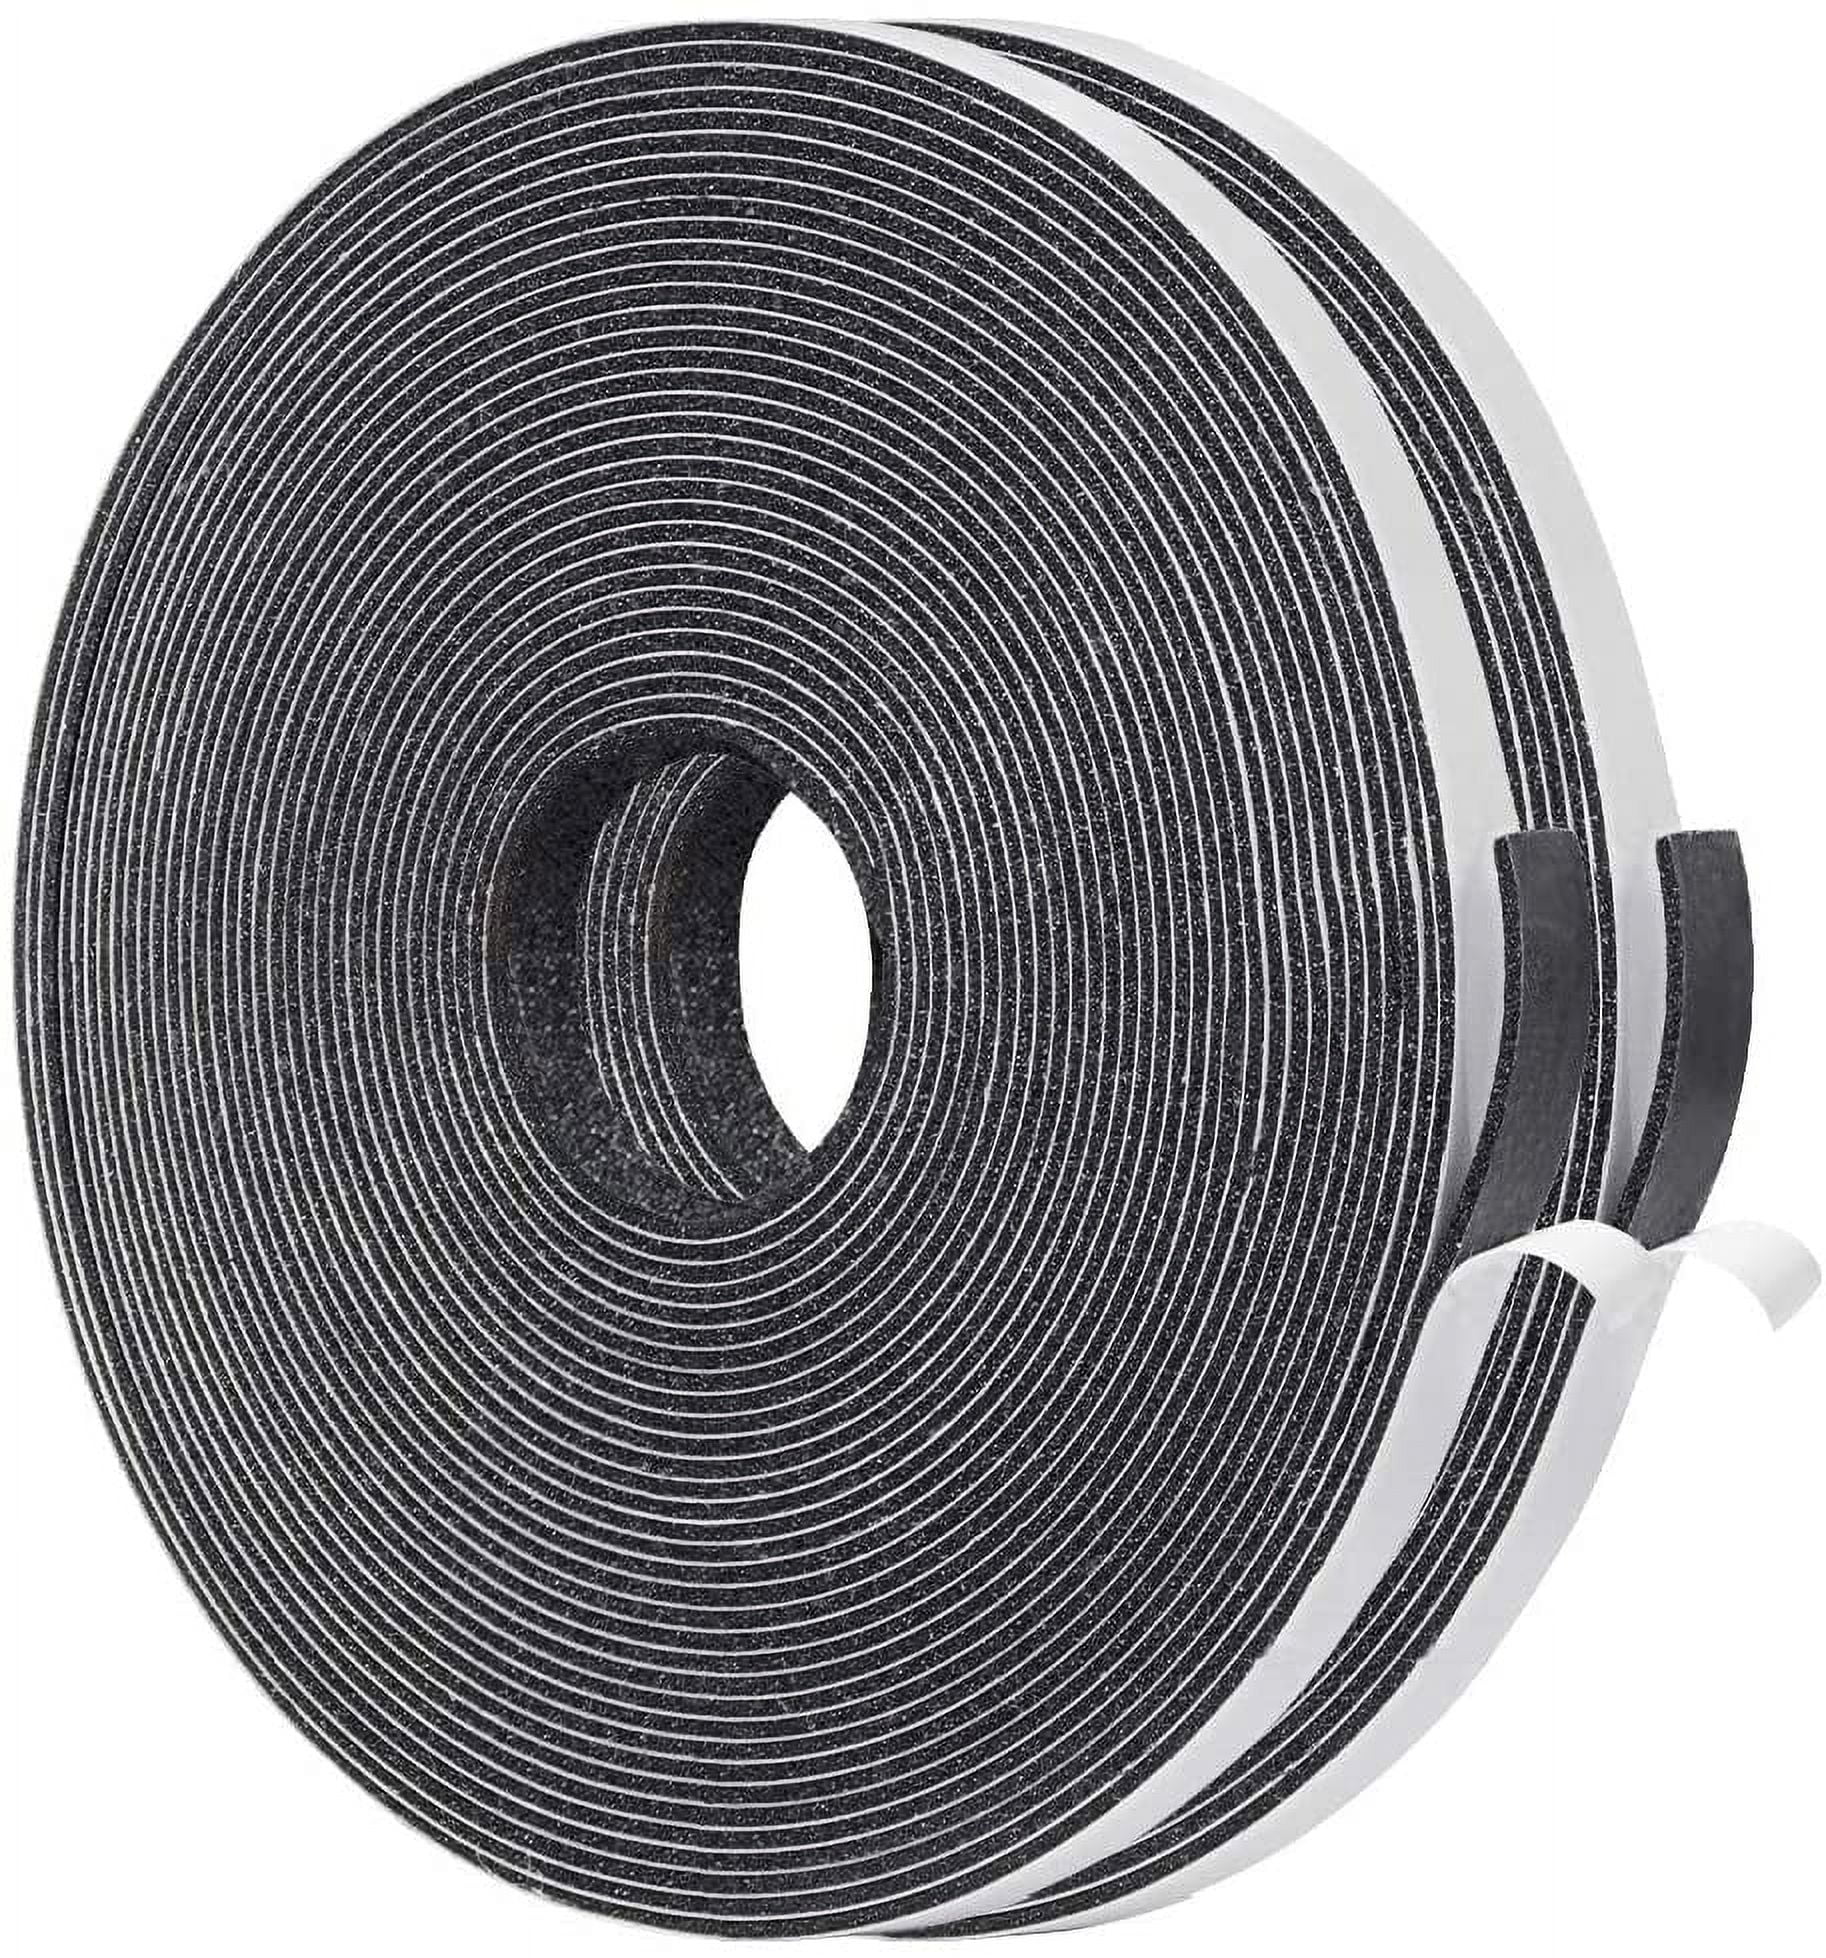 5mm thin black tape